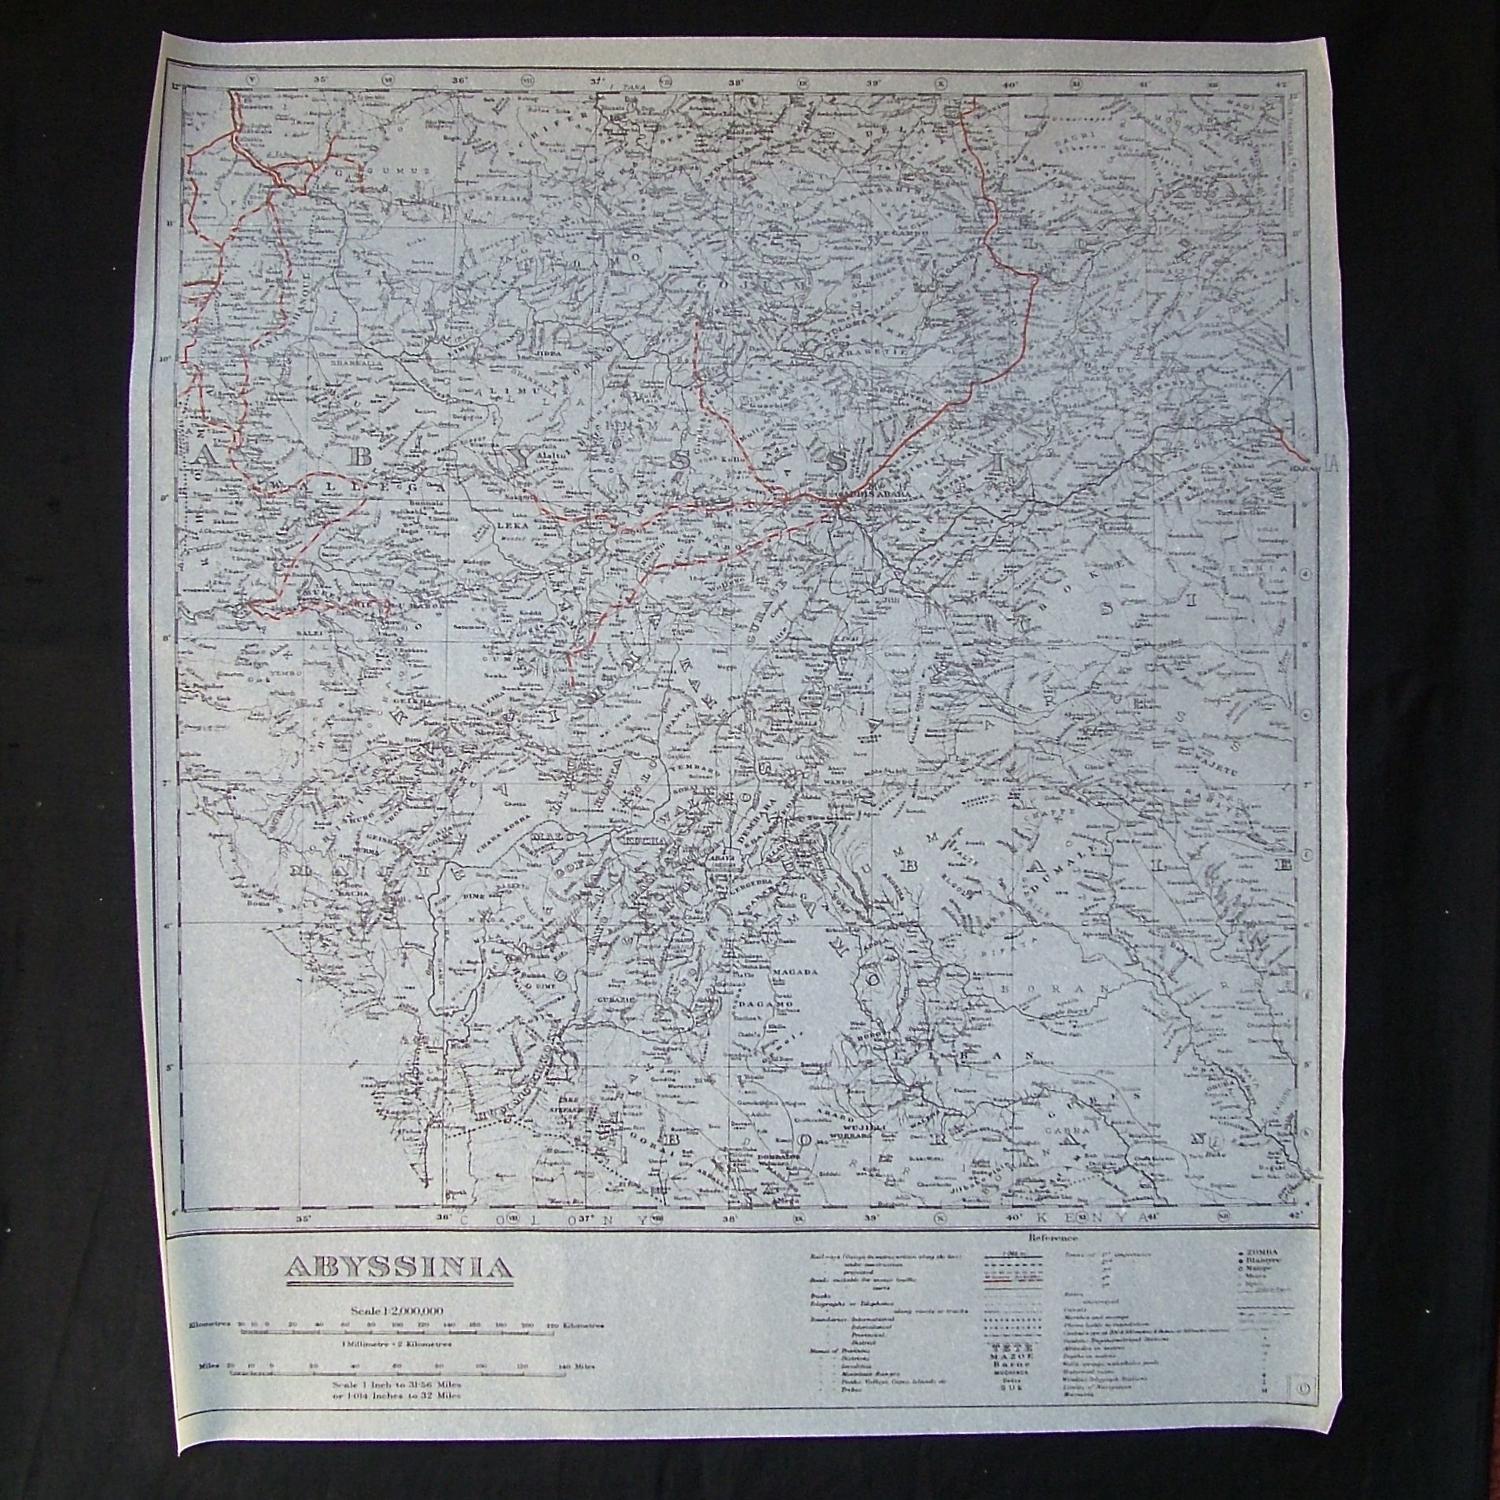 RAF tissue paper escape map - Abyssinia